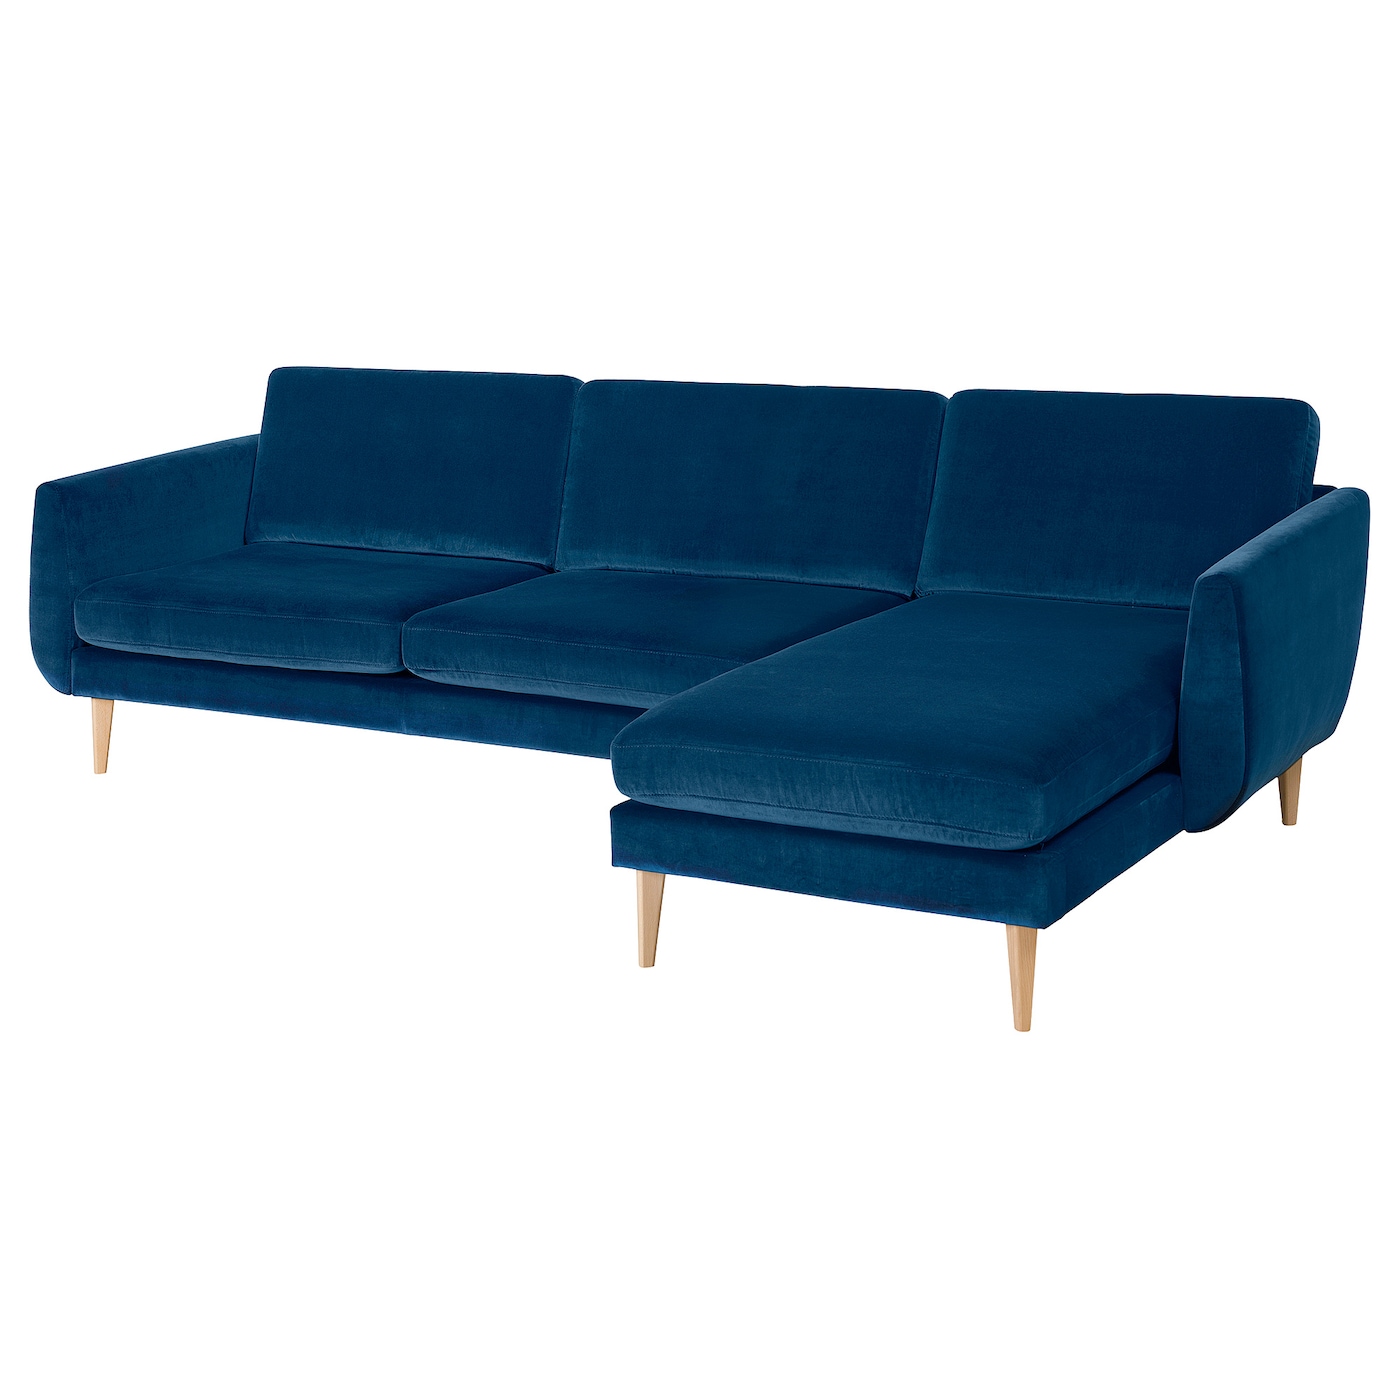 СМЕДСТОРП 4-местный диван + диван, Дюпарп/темно-зелено-синий дуб SMEDSTORP IKEA диван из тика с подушками